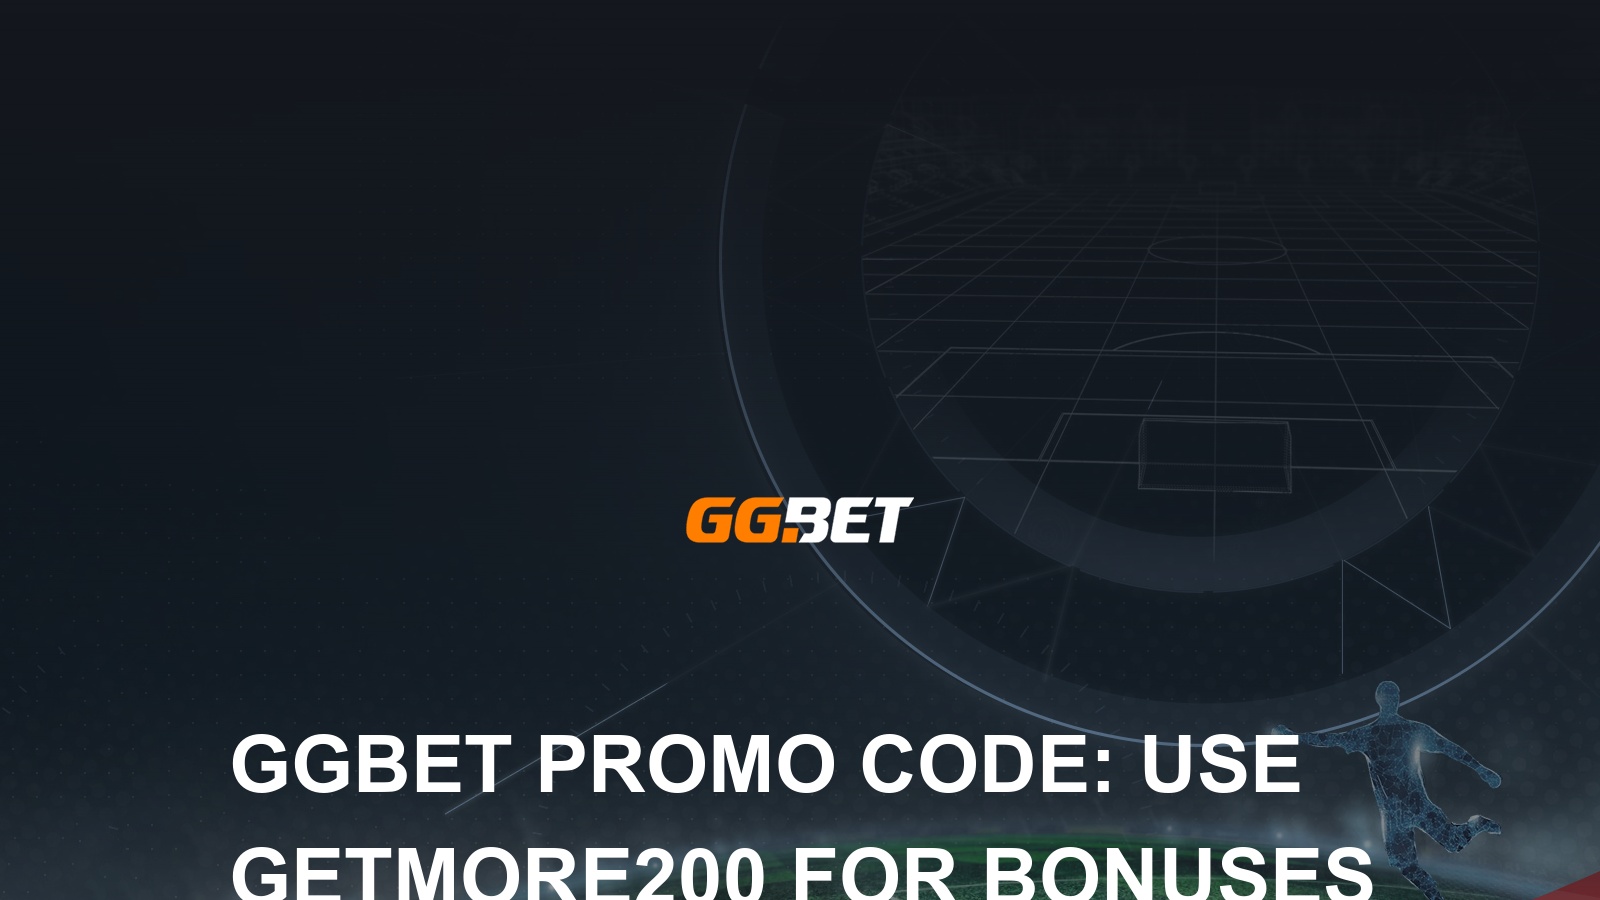 ggbet promo code no deposit